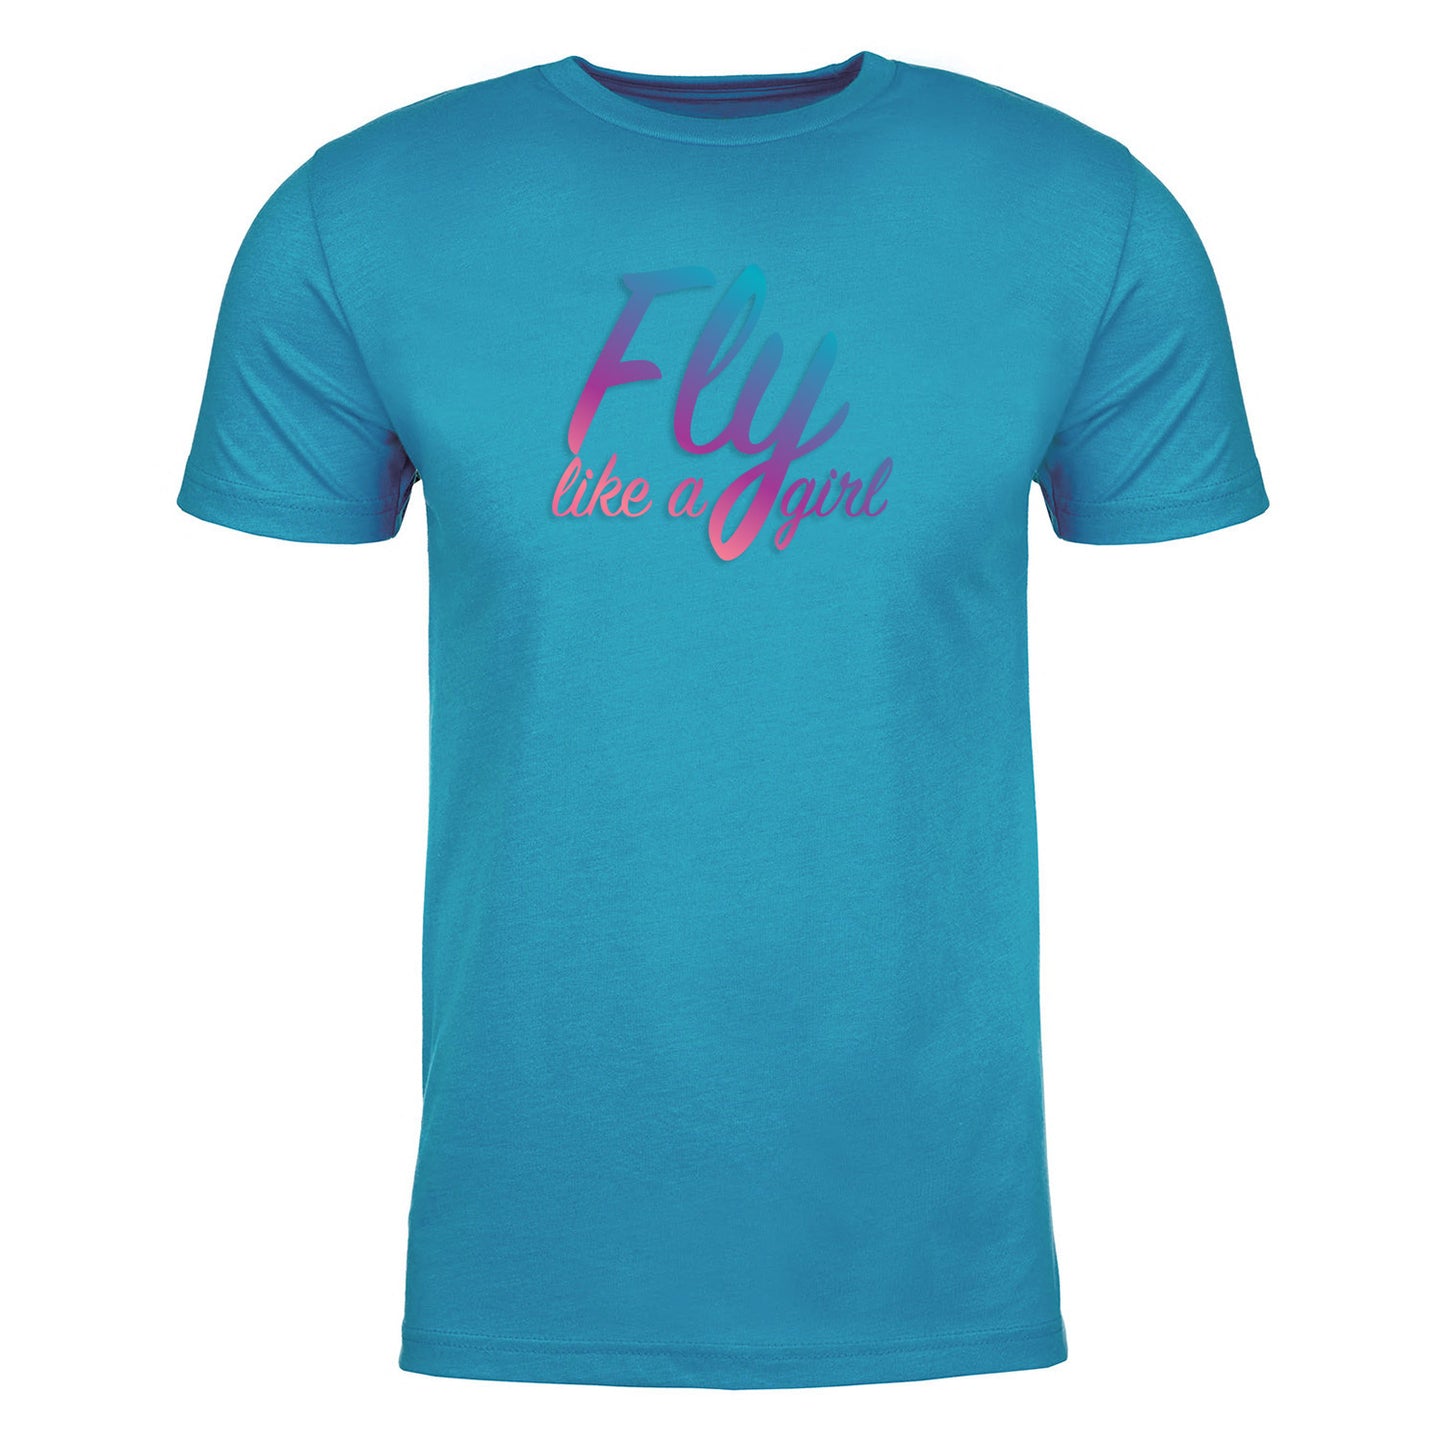 Fly Like a Girl T-shirt